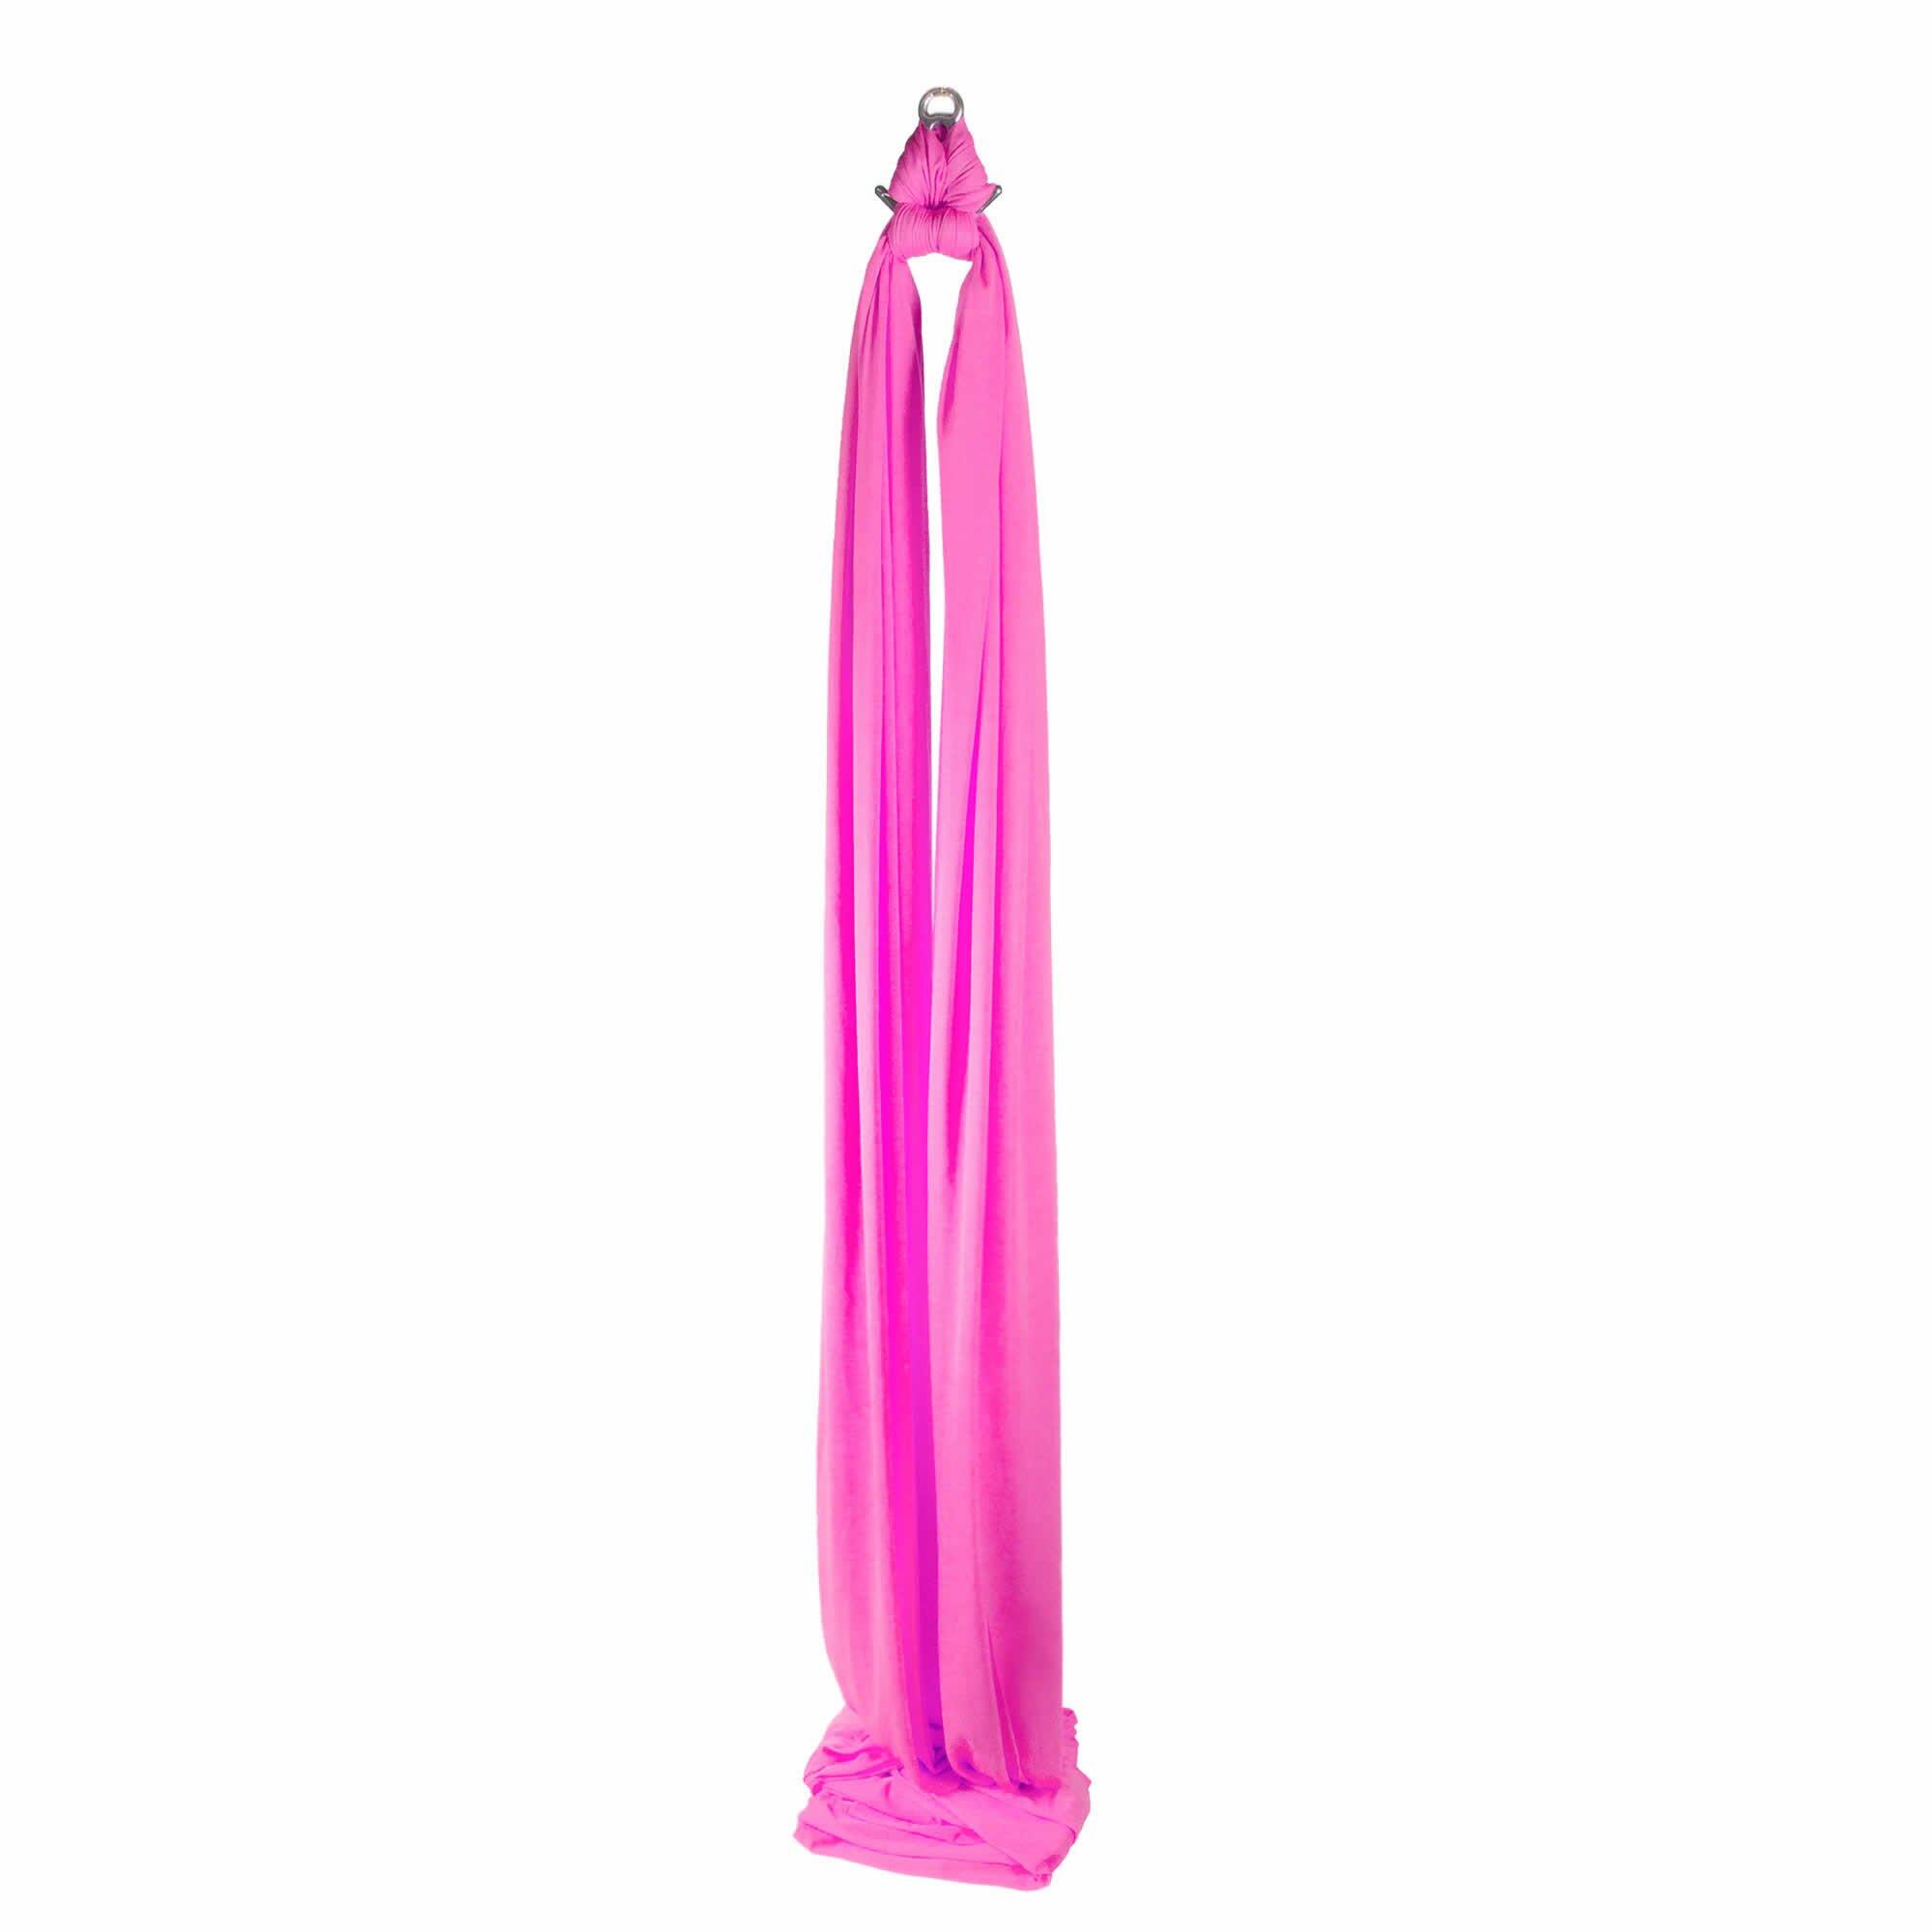 FIRETOYS Firetoys Aerial Silk (Aerial Fabric / Tissus) - Hot Pink